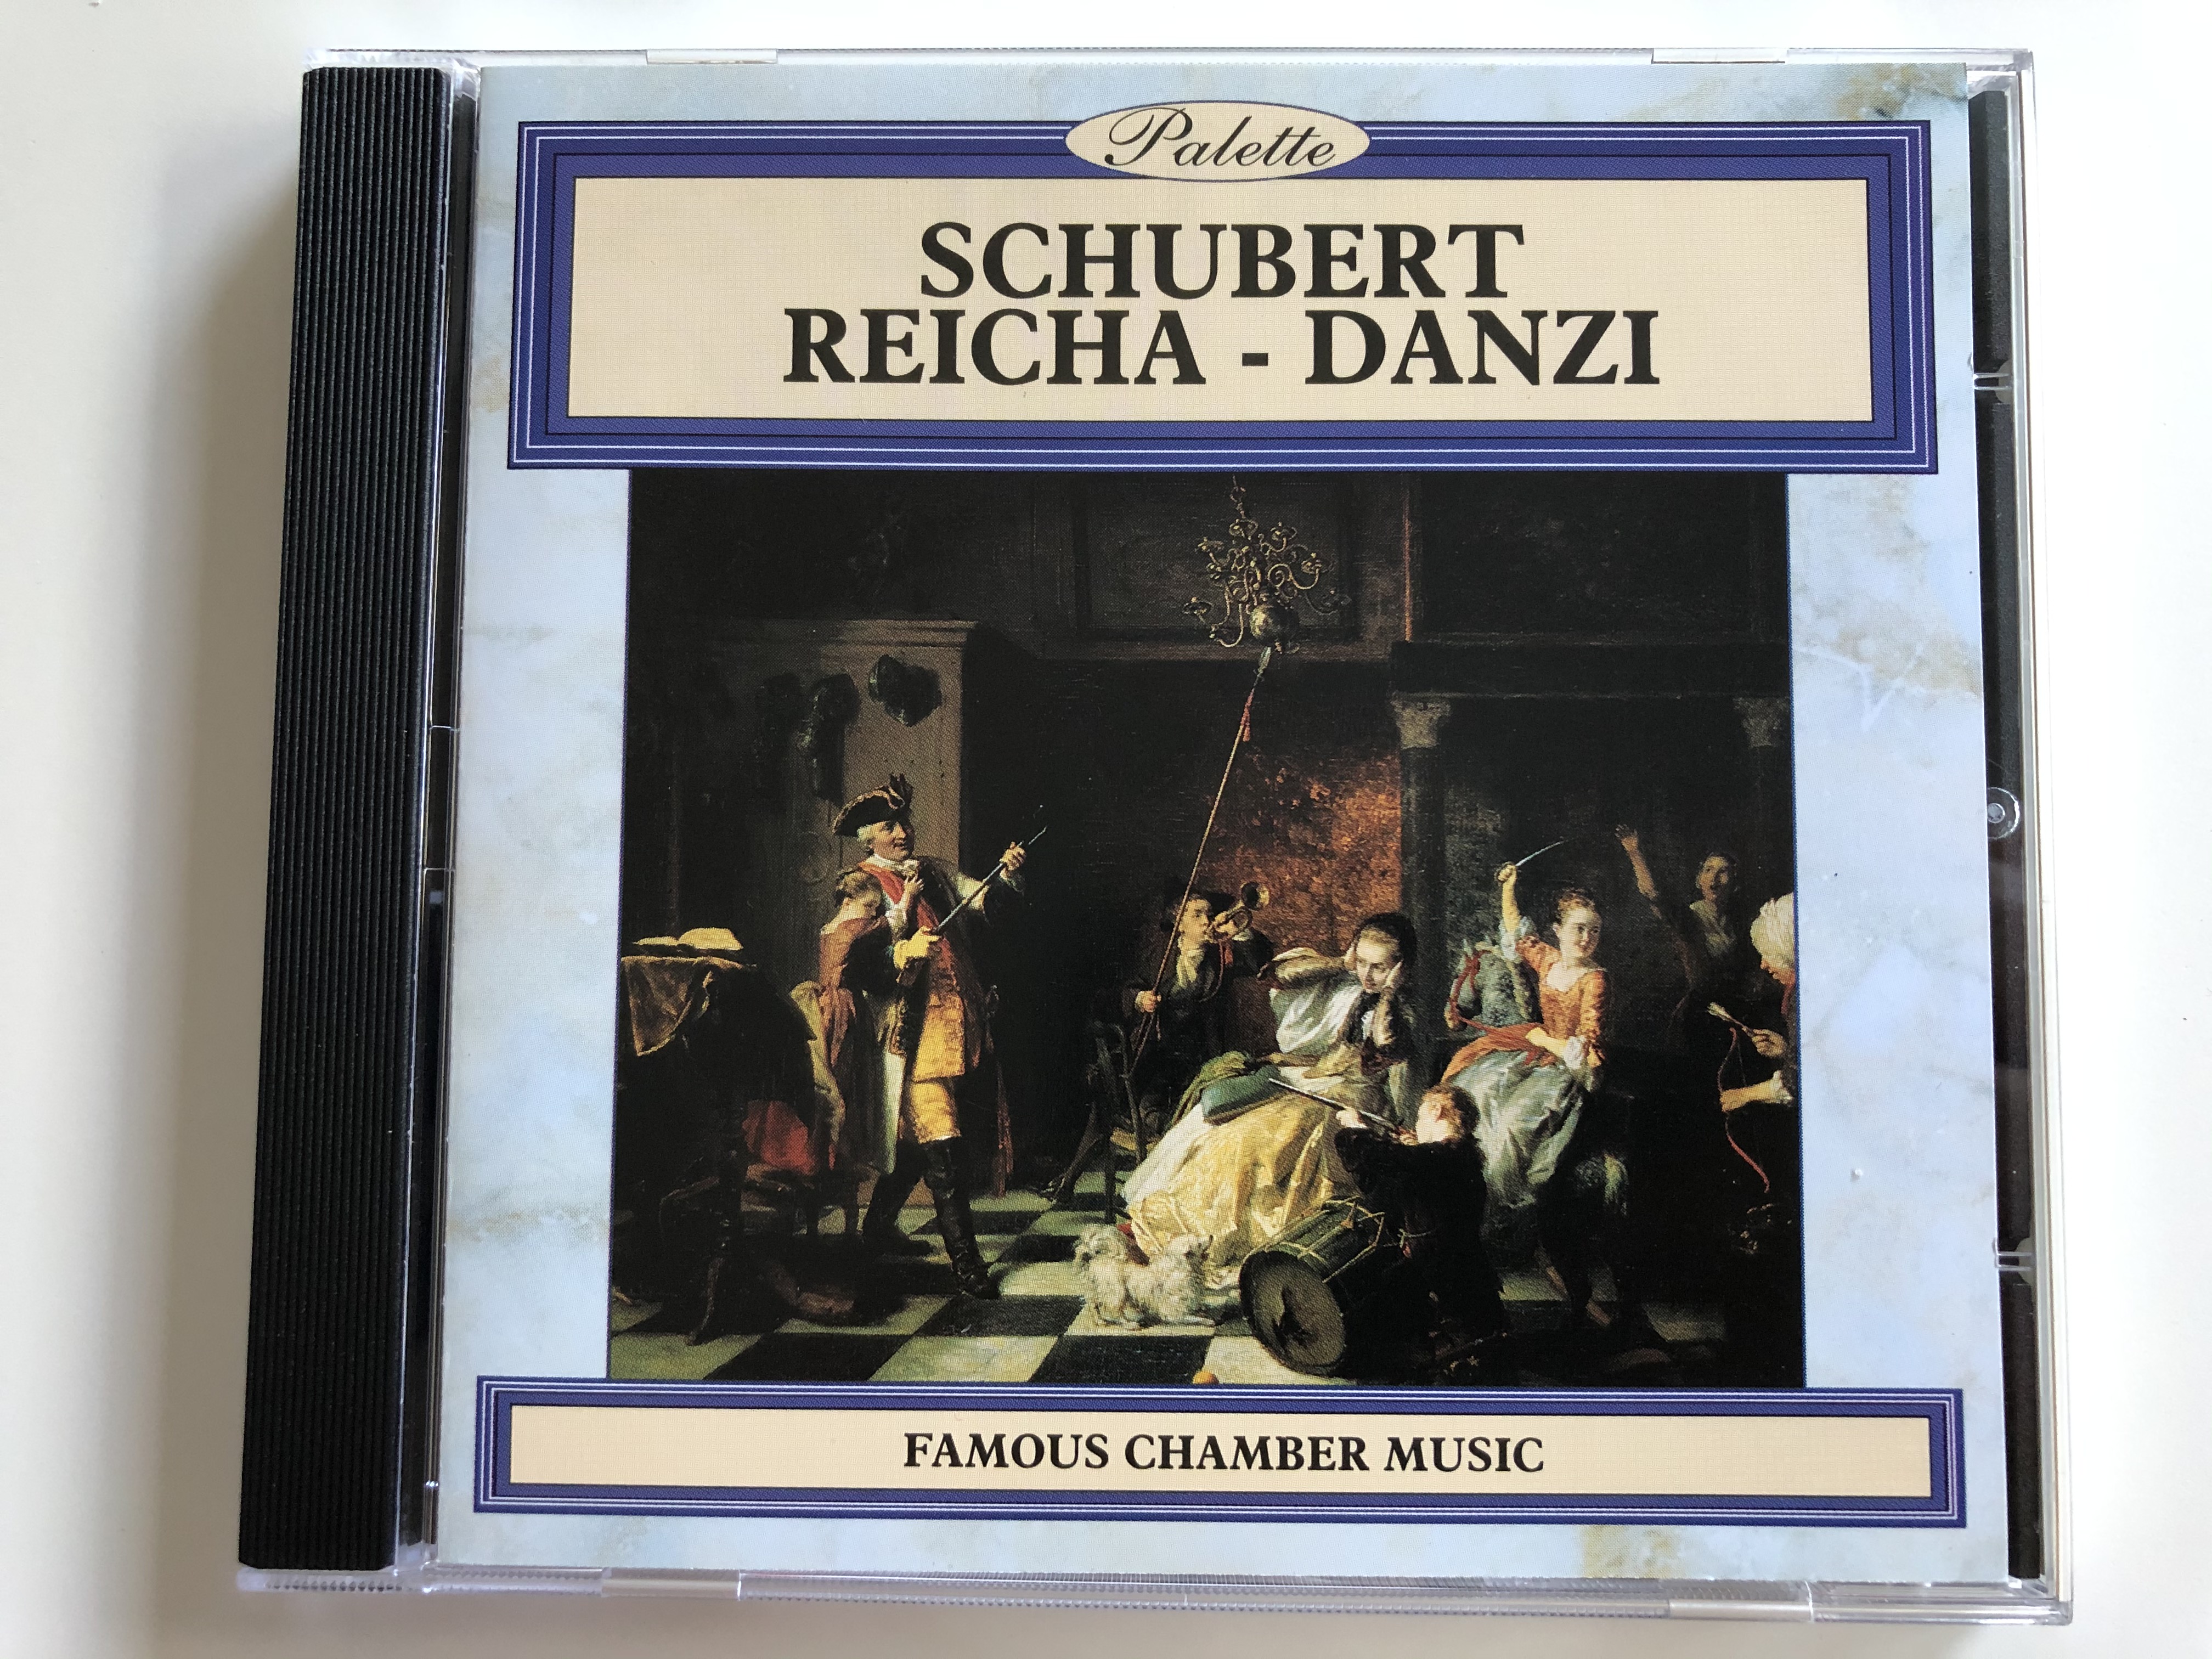 schubert-reicha-danzi-famous-chamber-music-palette-audio-cd-1996-pal085-1-.jpg